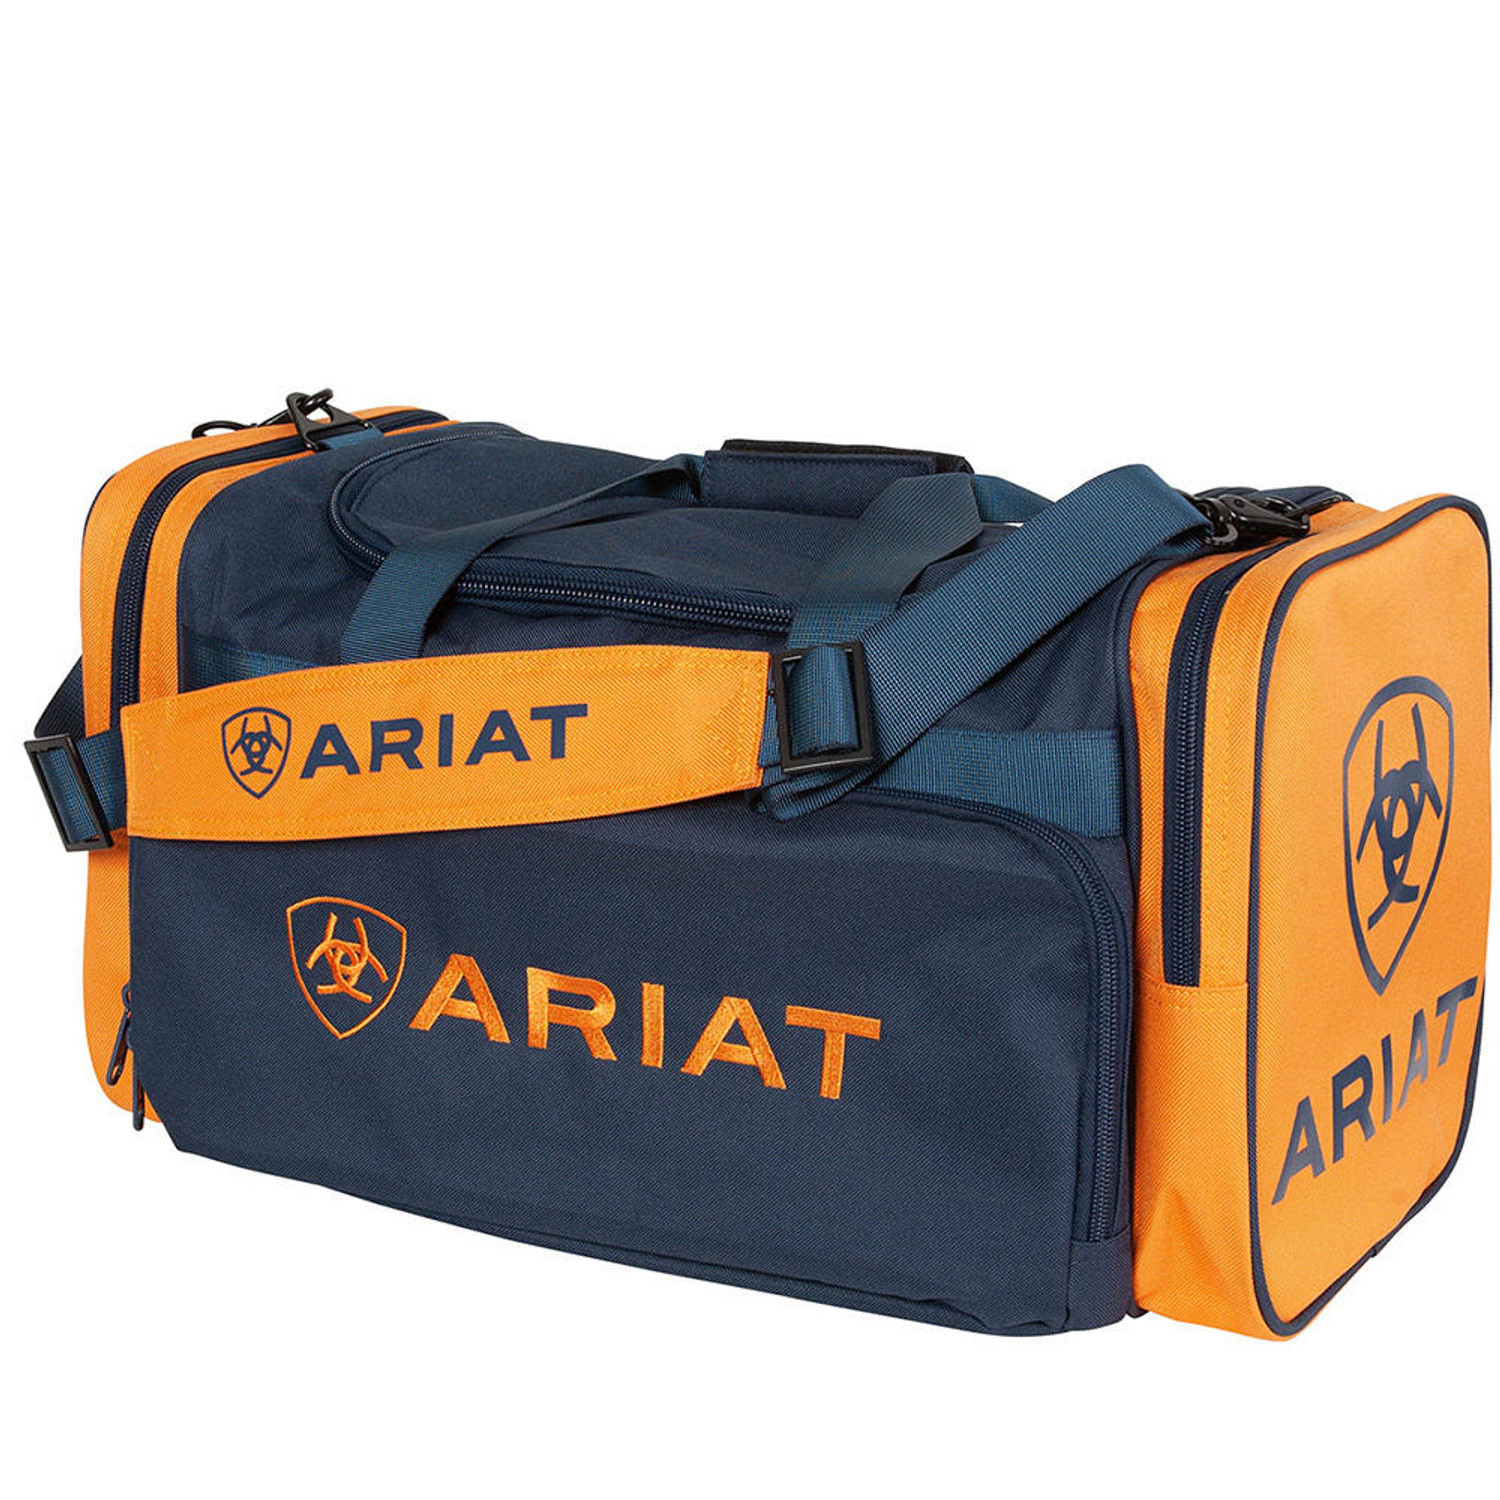 Ariat ARIAT JUNIOR GEAR BAG 4-500 ORANGE/NAVY